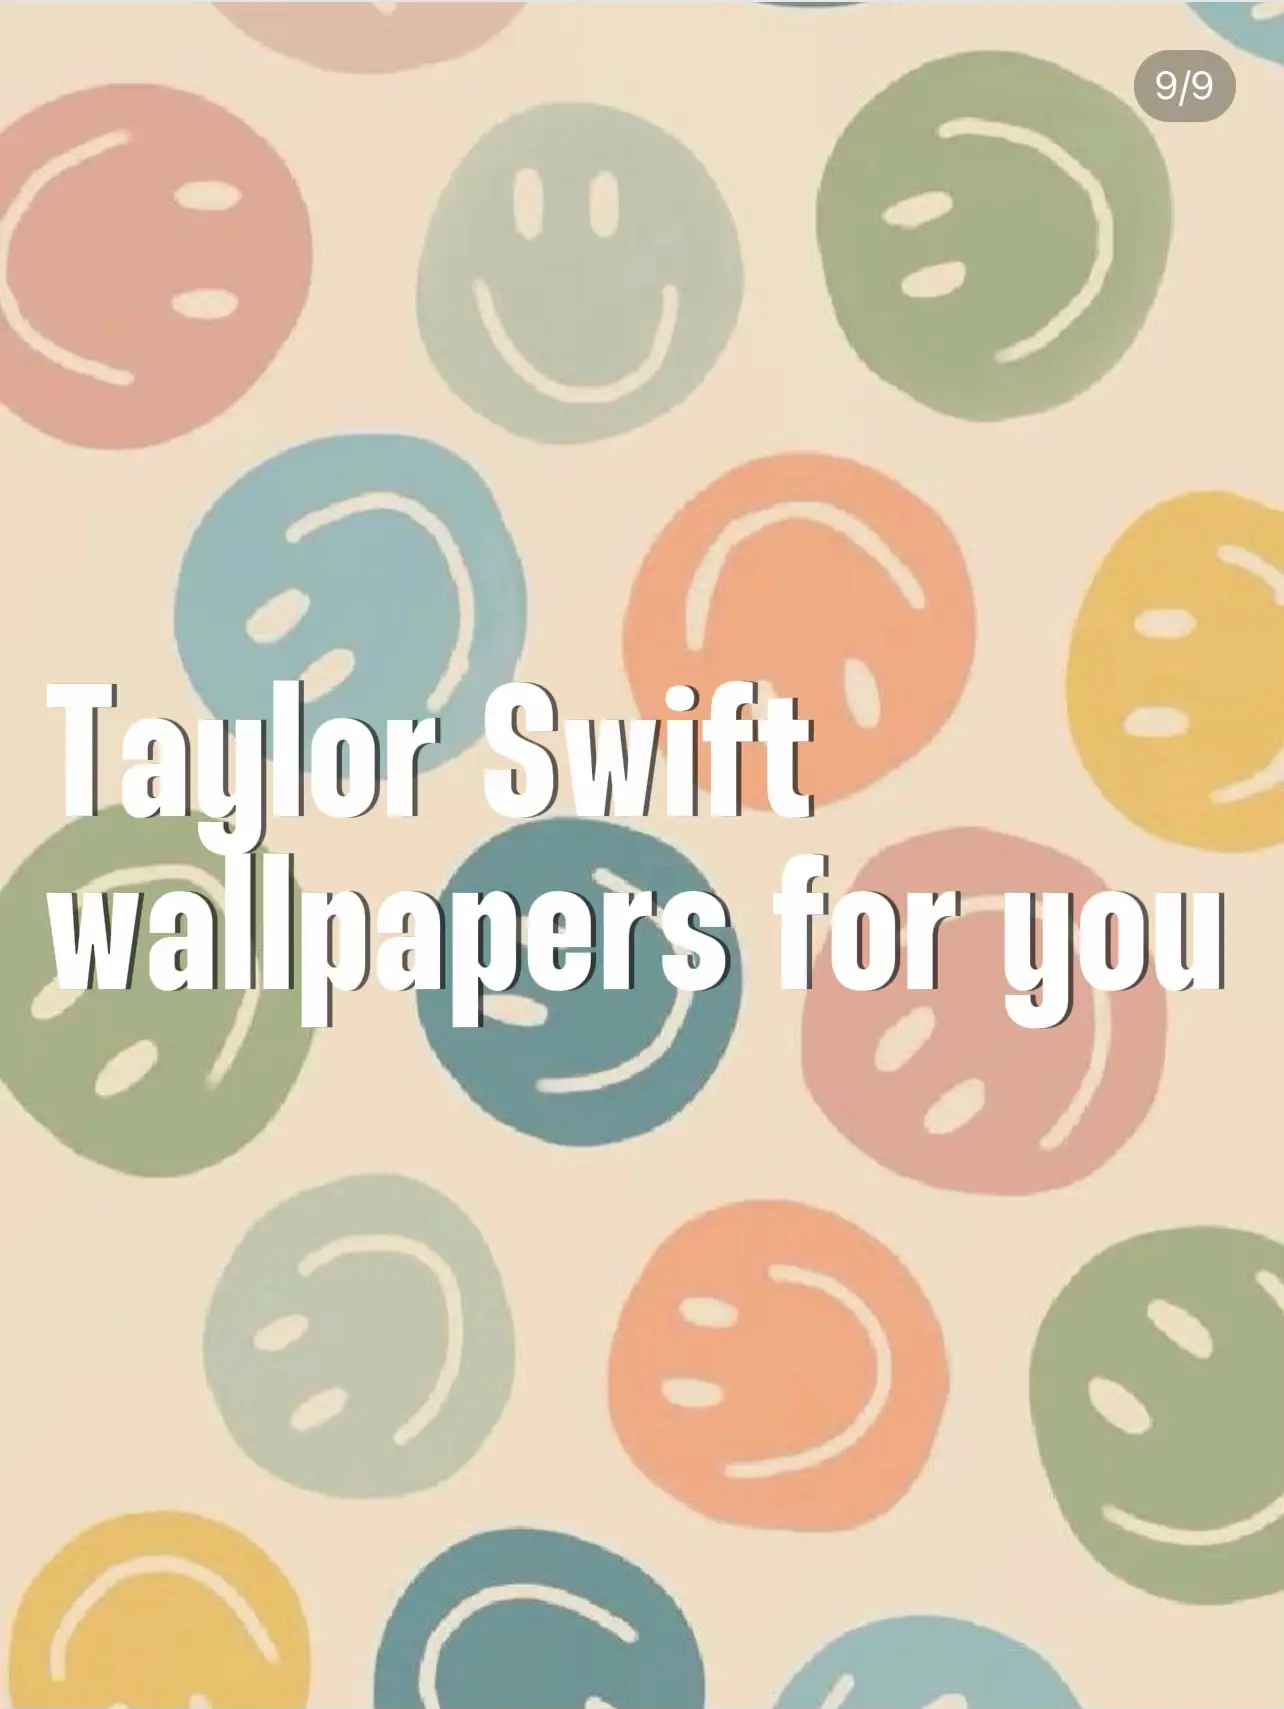 Folklore Stickers for Sale  Taylor swift lyrics, Taylor swift wallpaper, Taylor  swift songs